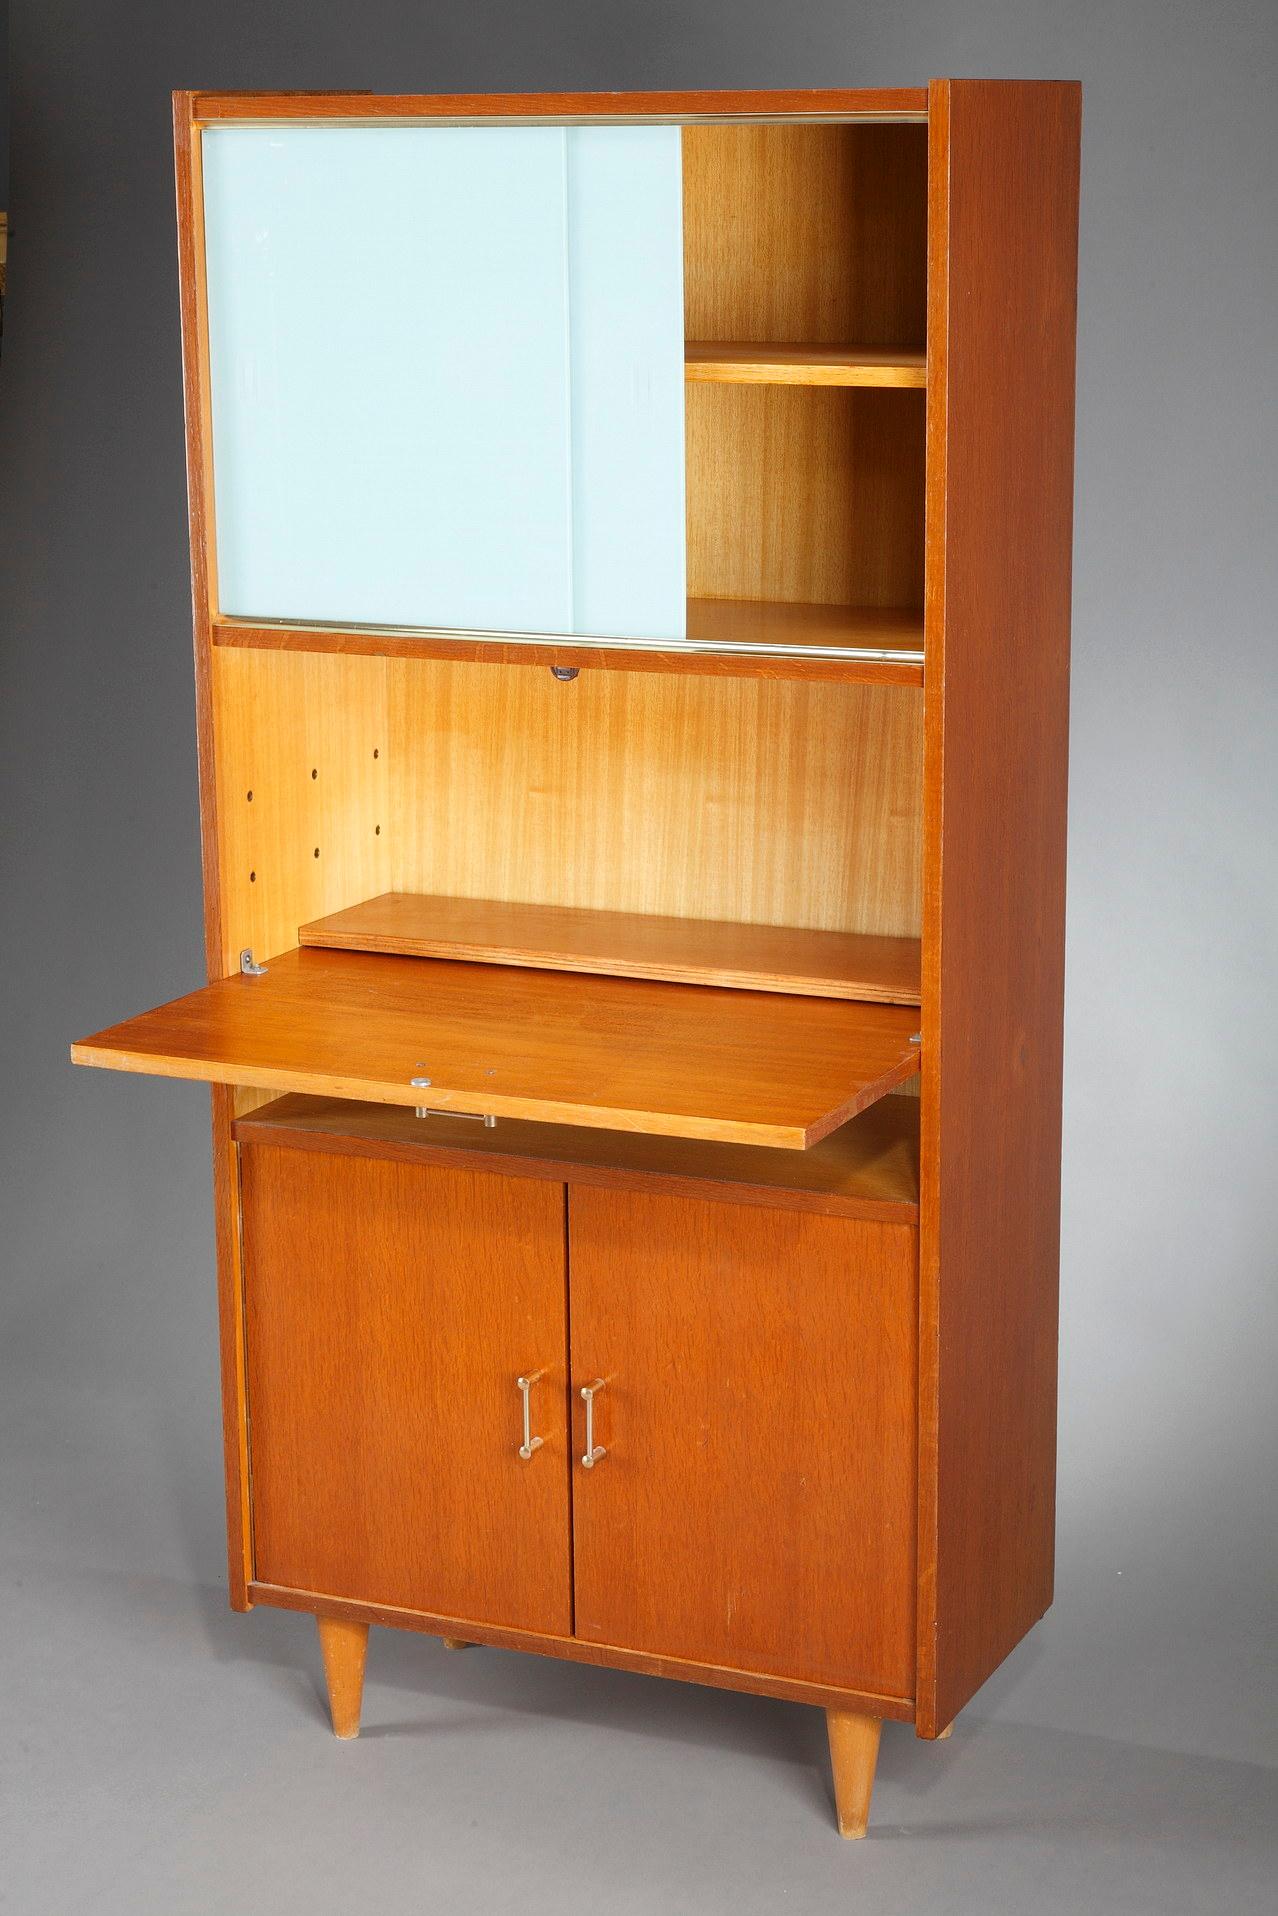 Veneer Mid-Century Modern Desk from the 1960s For Sale